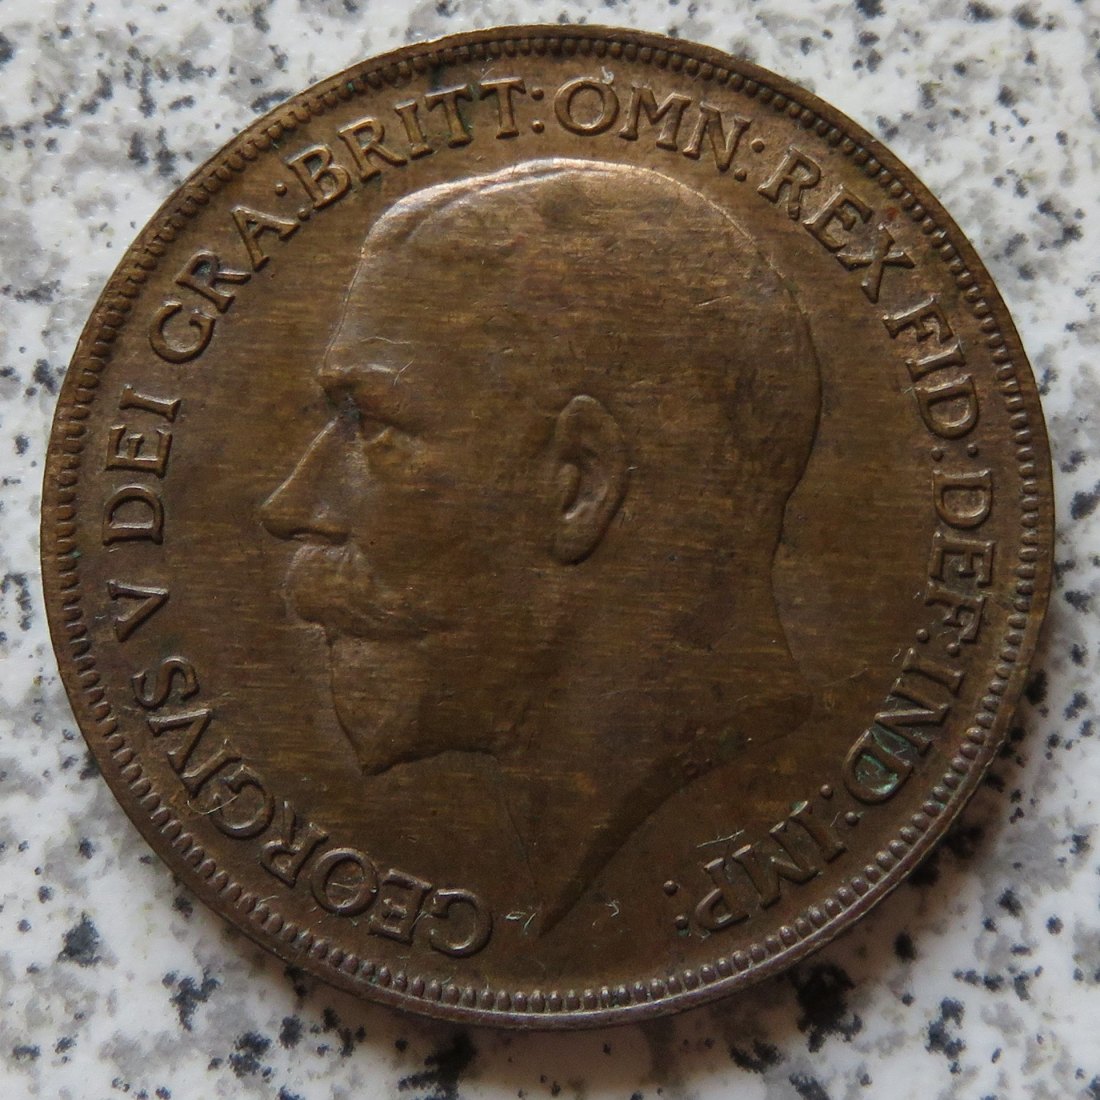  Großbritannien One Penny 1920   